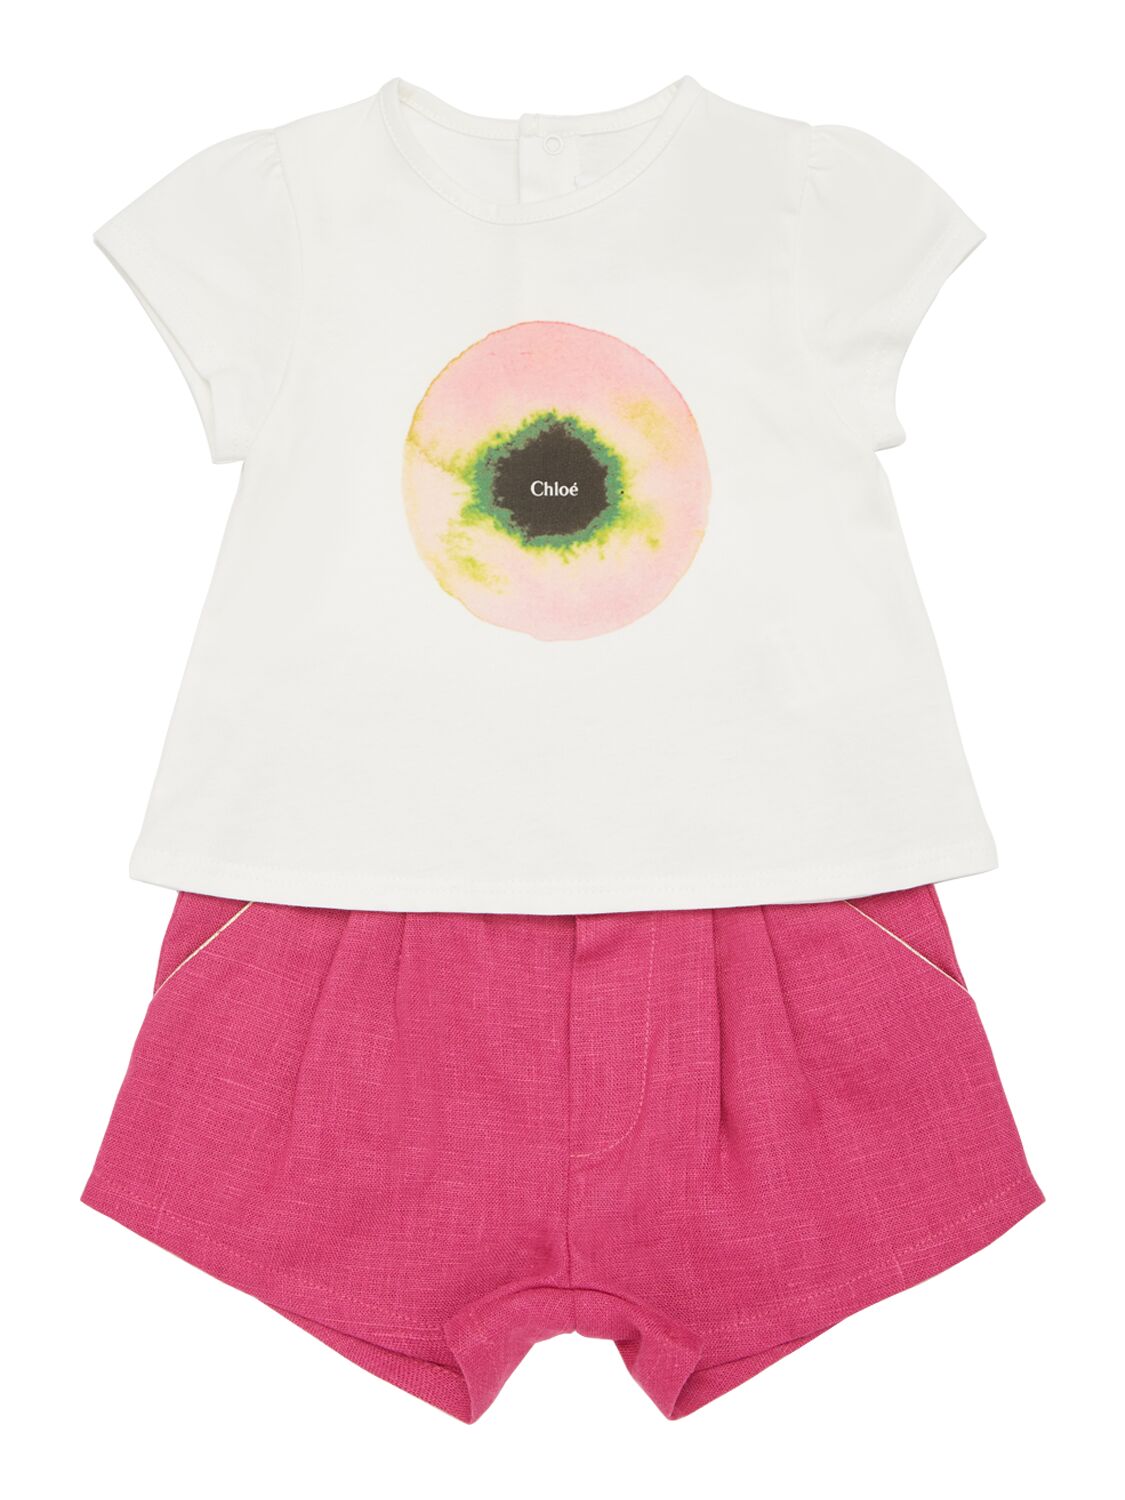 Chloé Kids logo-print organic cotton short set - Pink